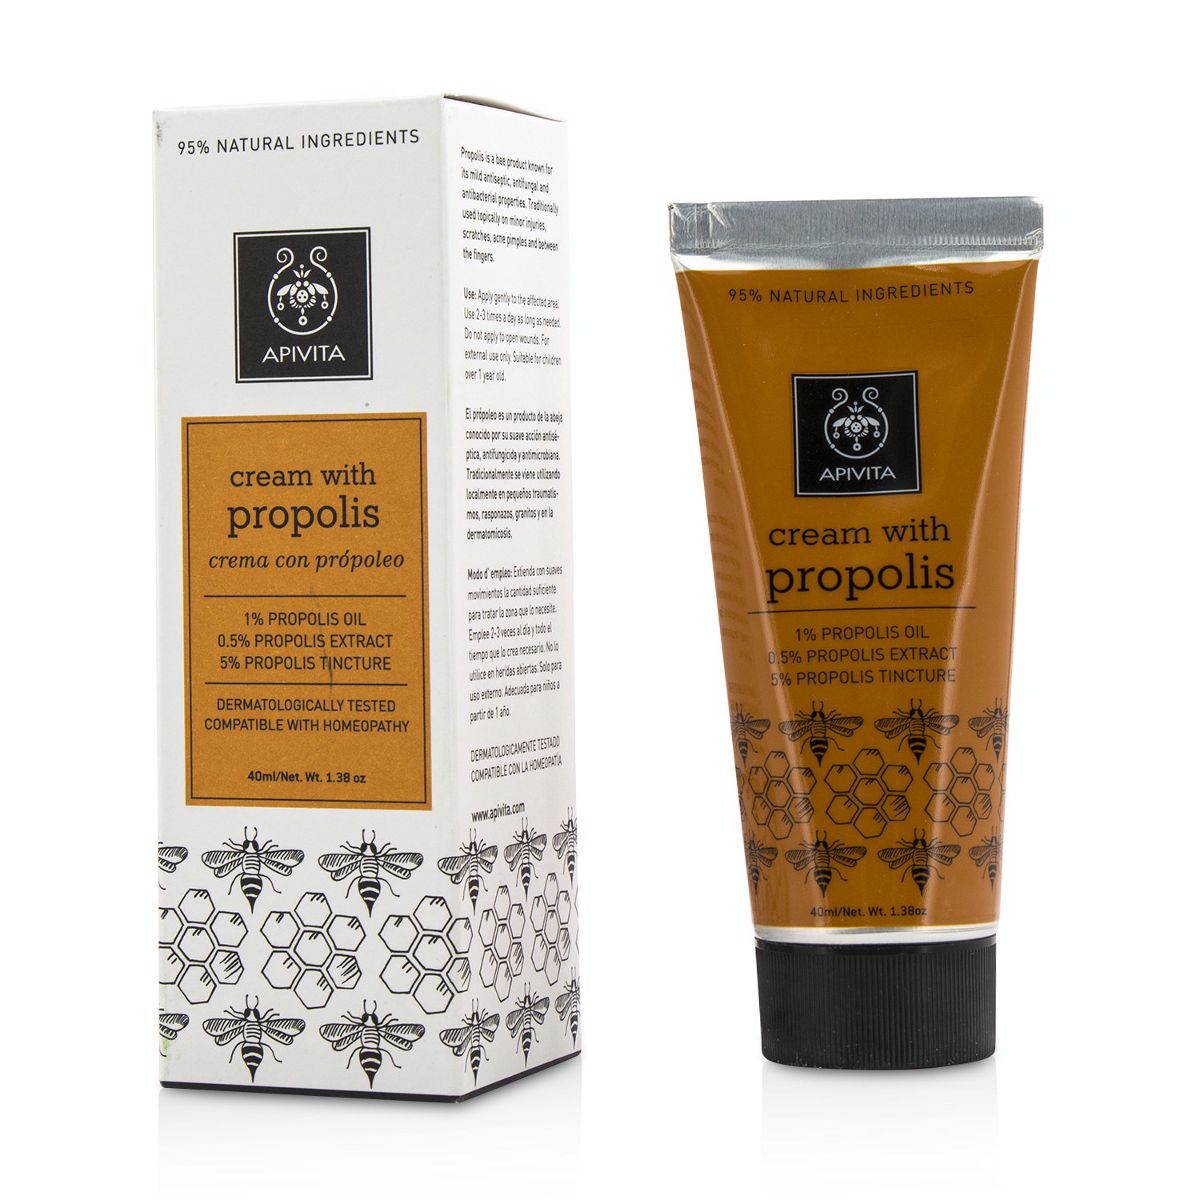 Cream With Propolis Apivita Image